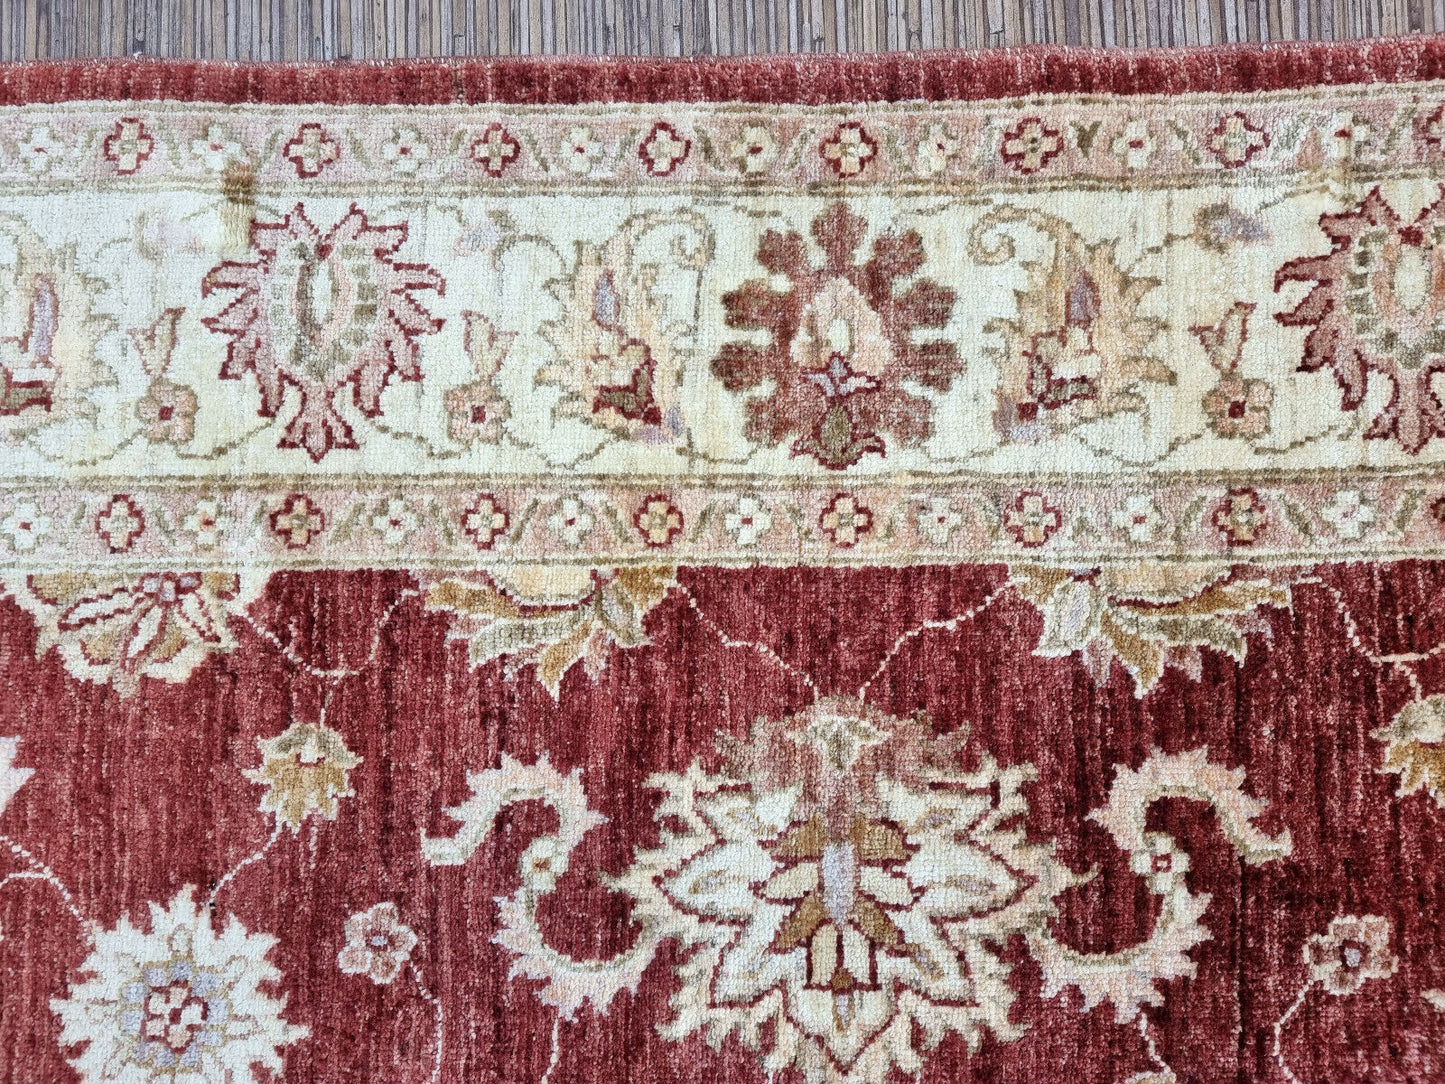 Close-up of cream-colored floral motifs on Handmade Vintage Afghan Zigler Rug - Detailed view showcasing the cream-colored floral motifs woven into the rug.